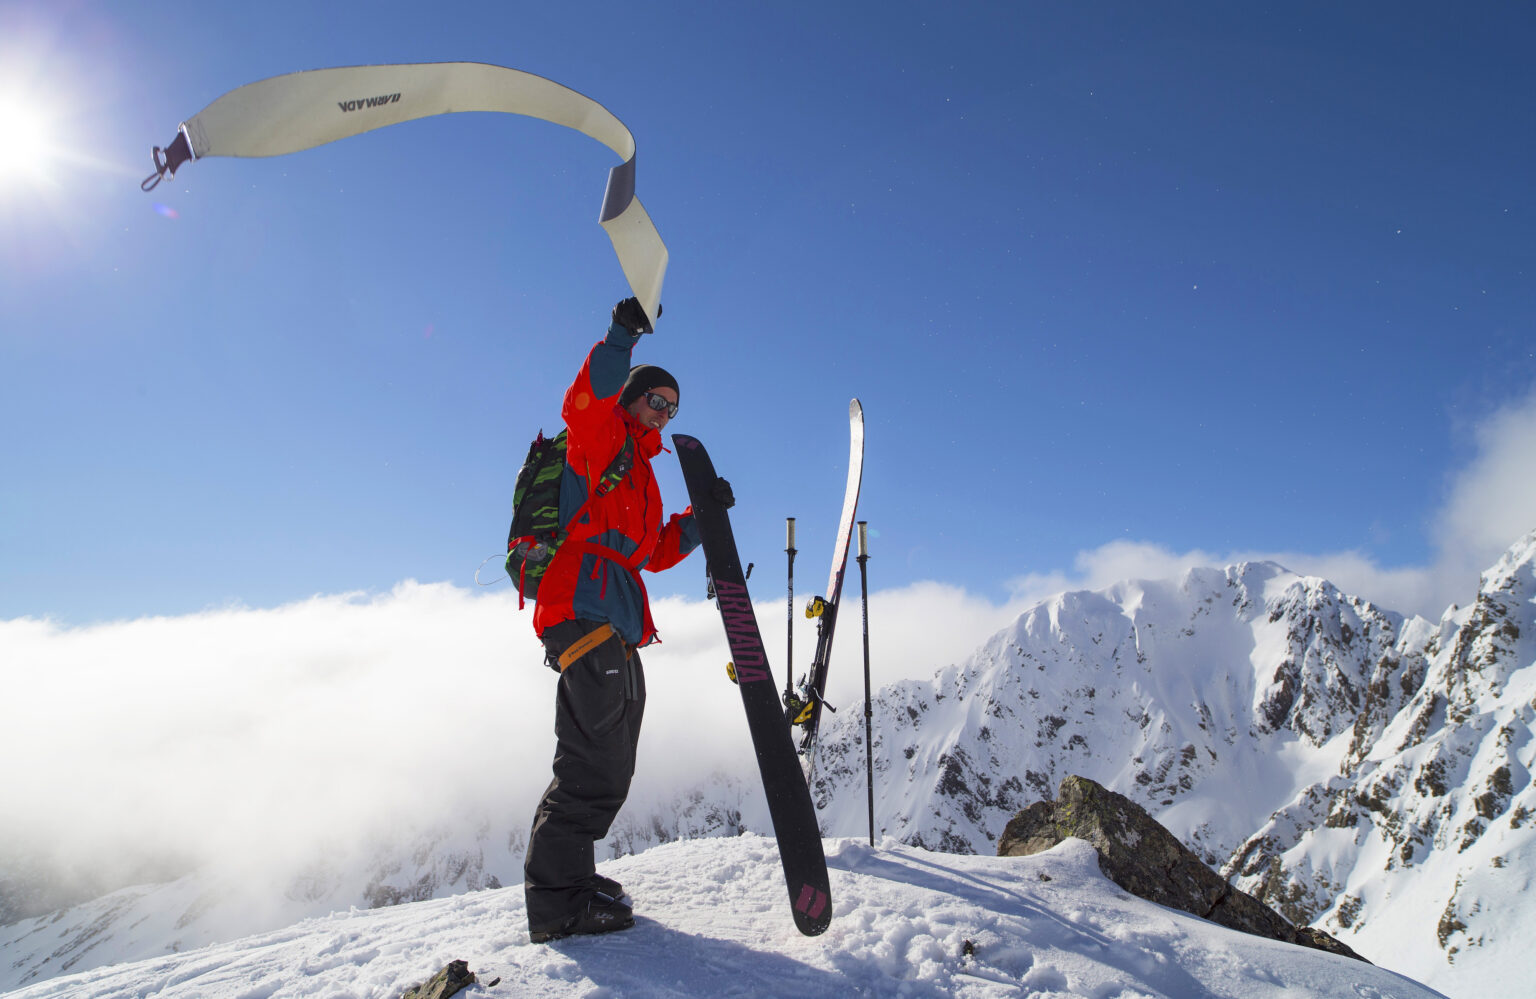 Martin Chester backcountry skiing hacks